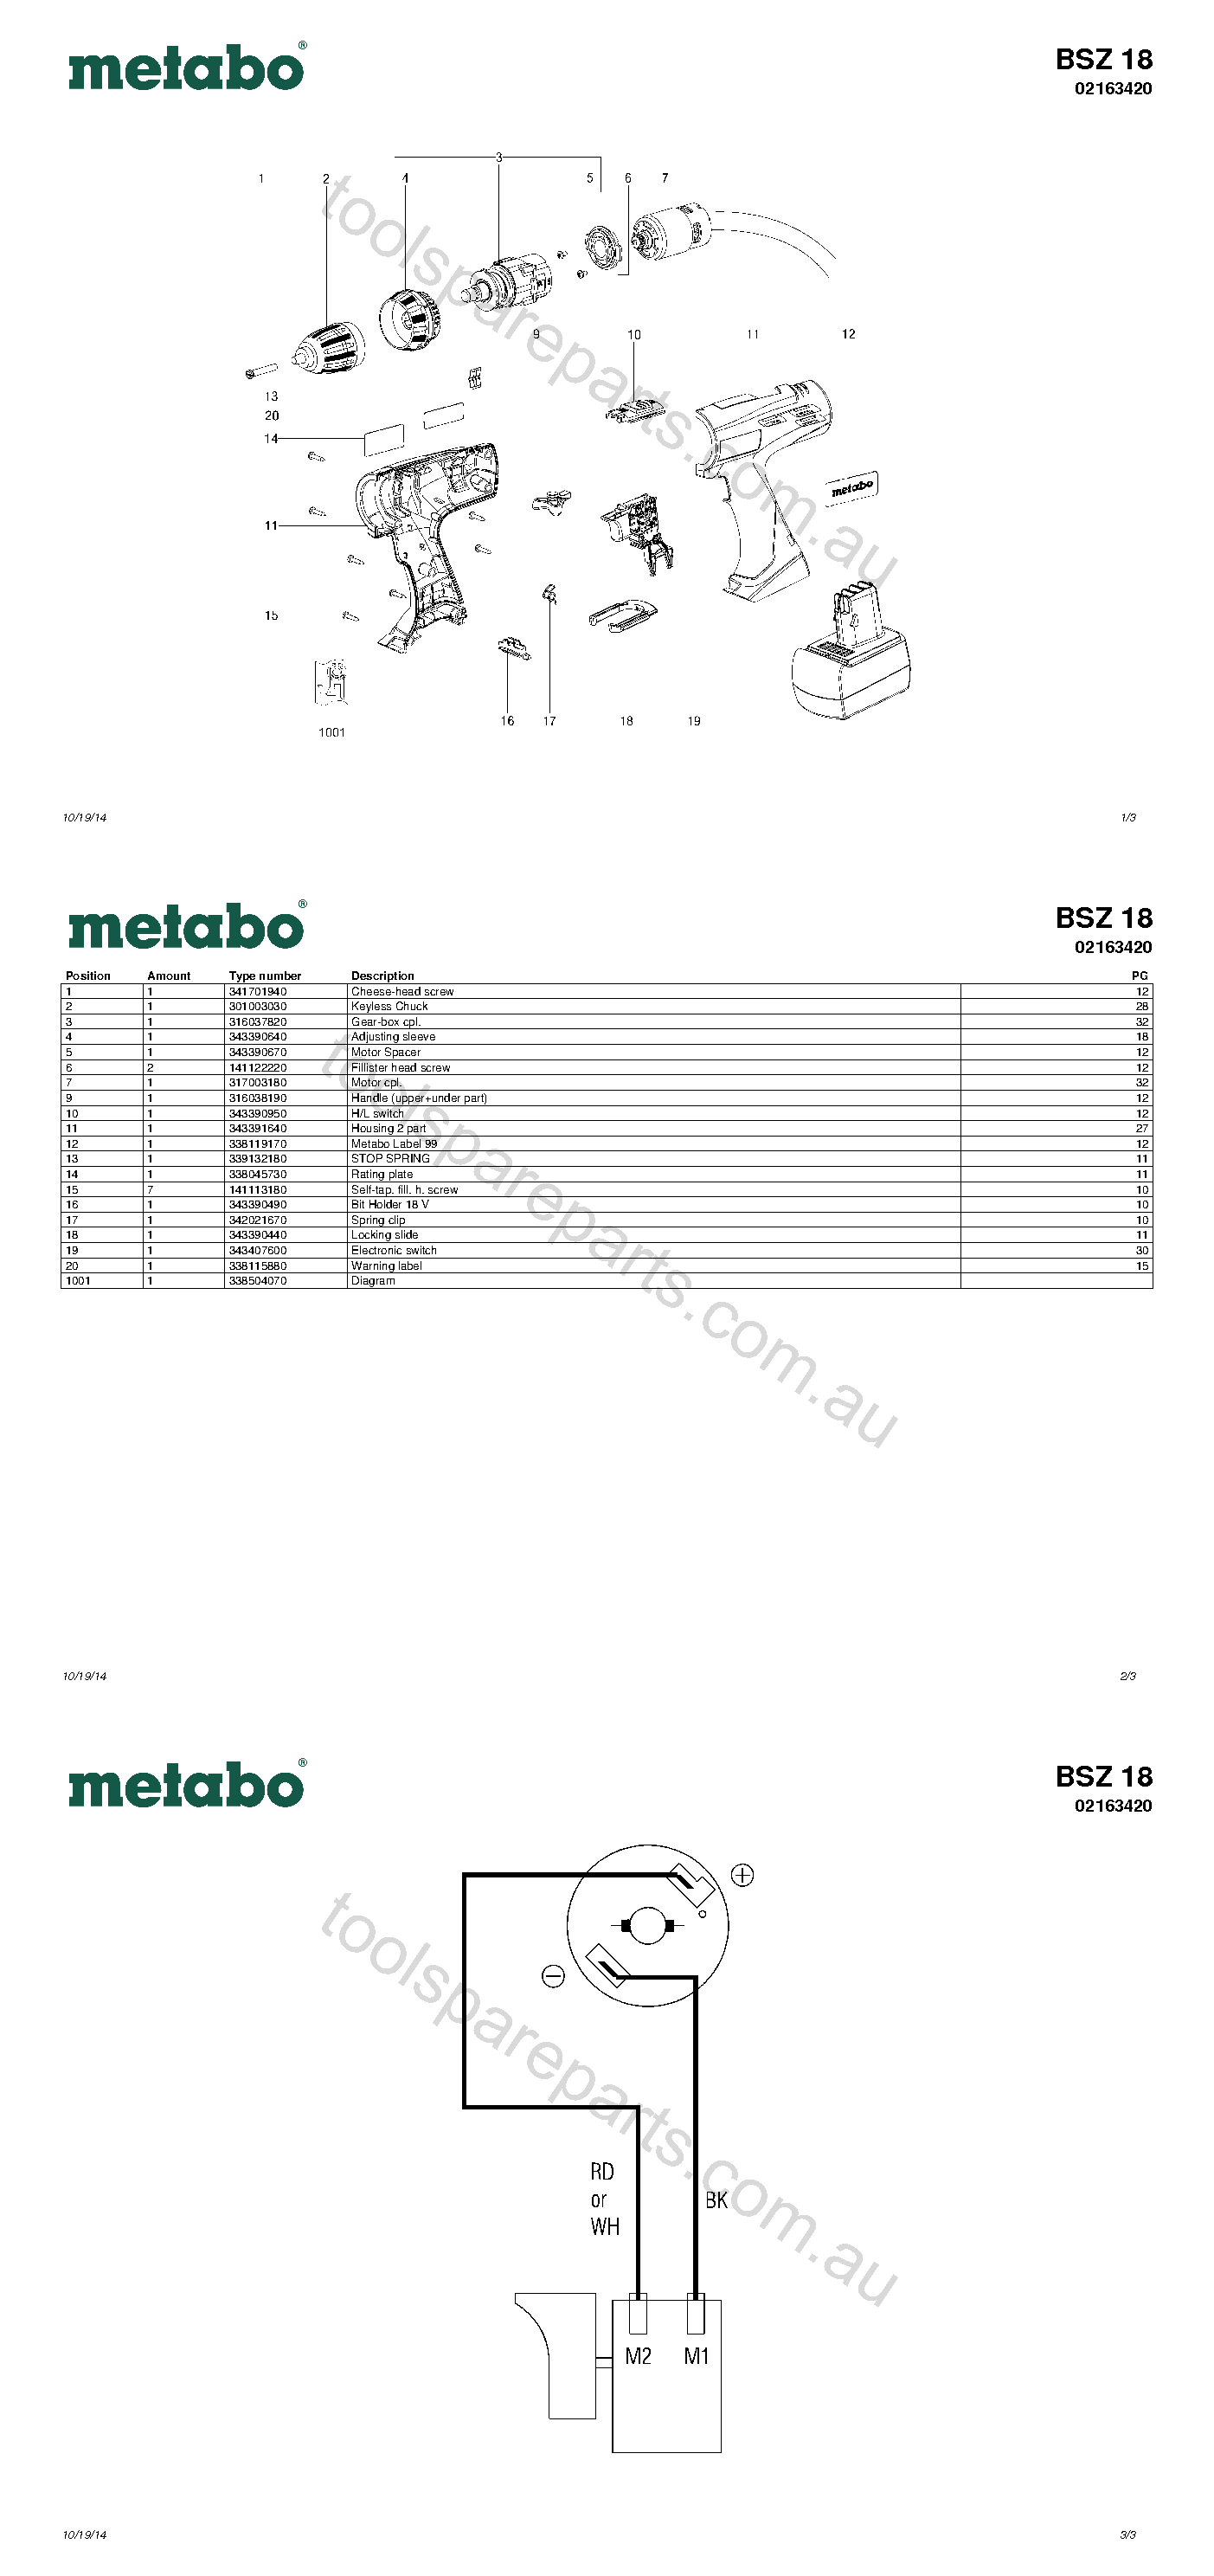 Metabo BSZ 18 02163420  Diagram 1